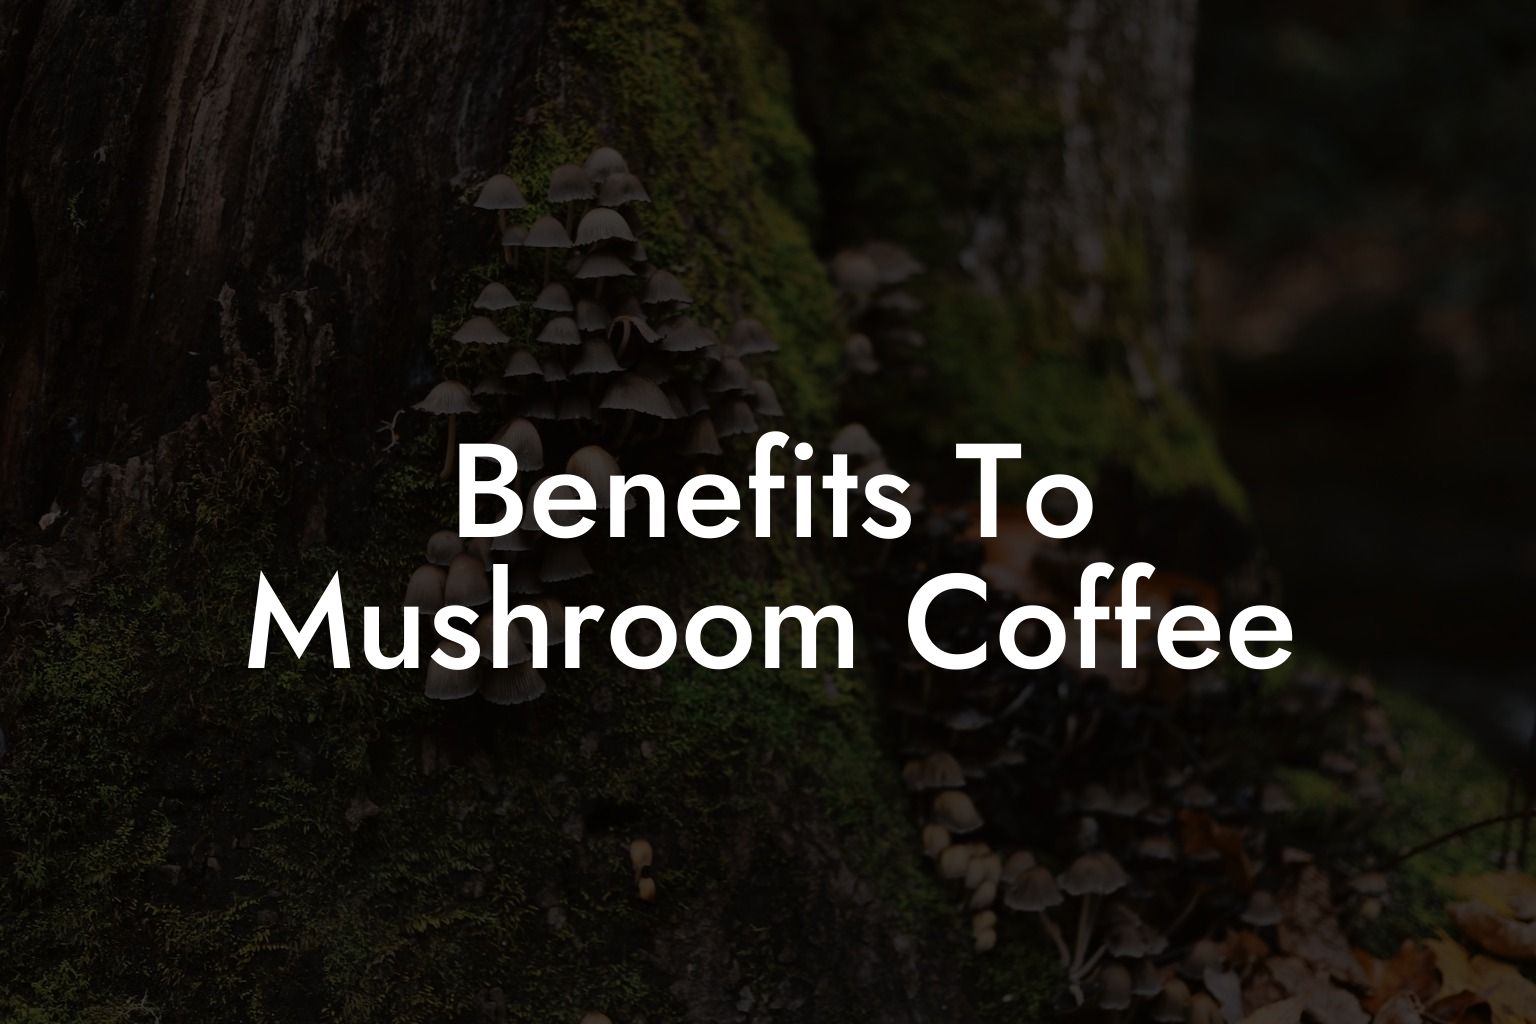 Benefits To Mushroom Coffee